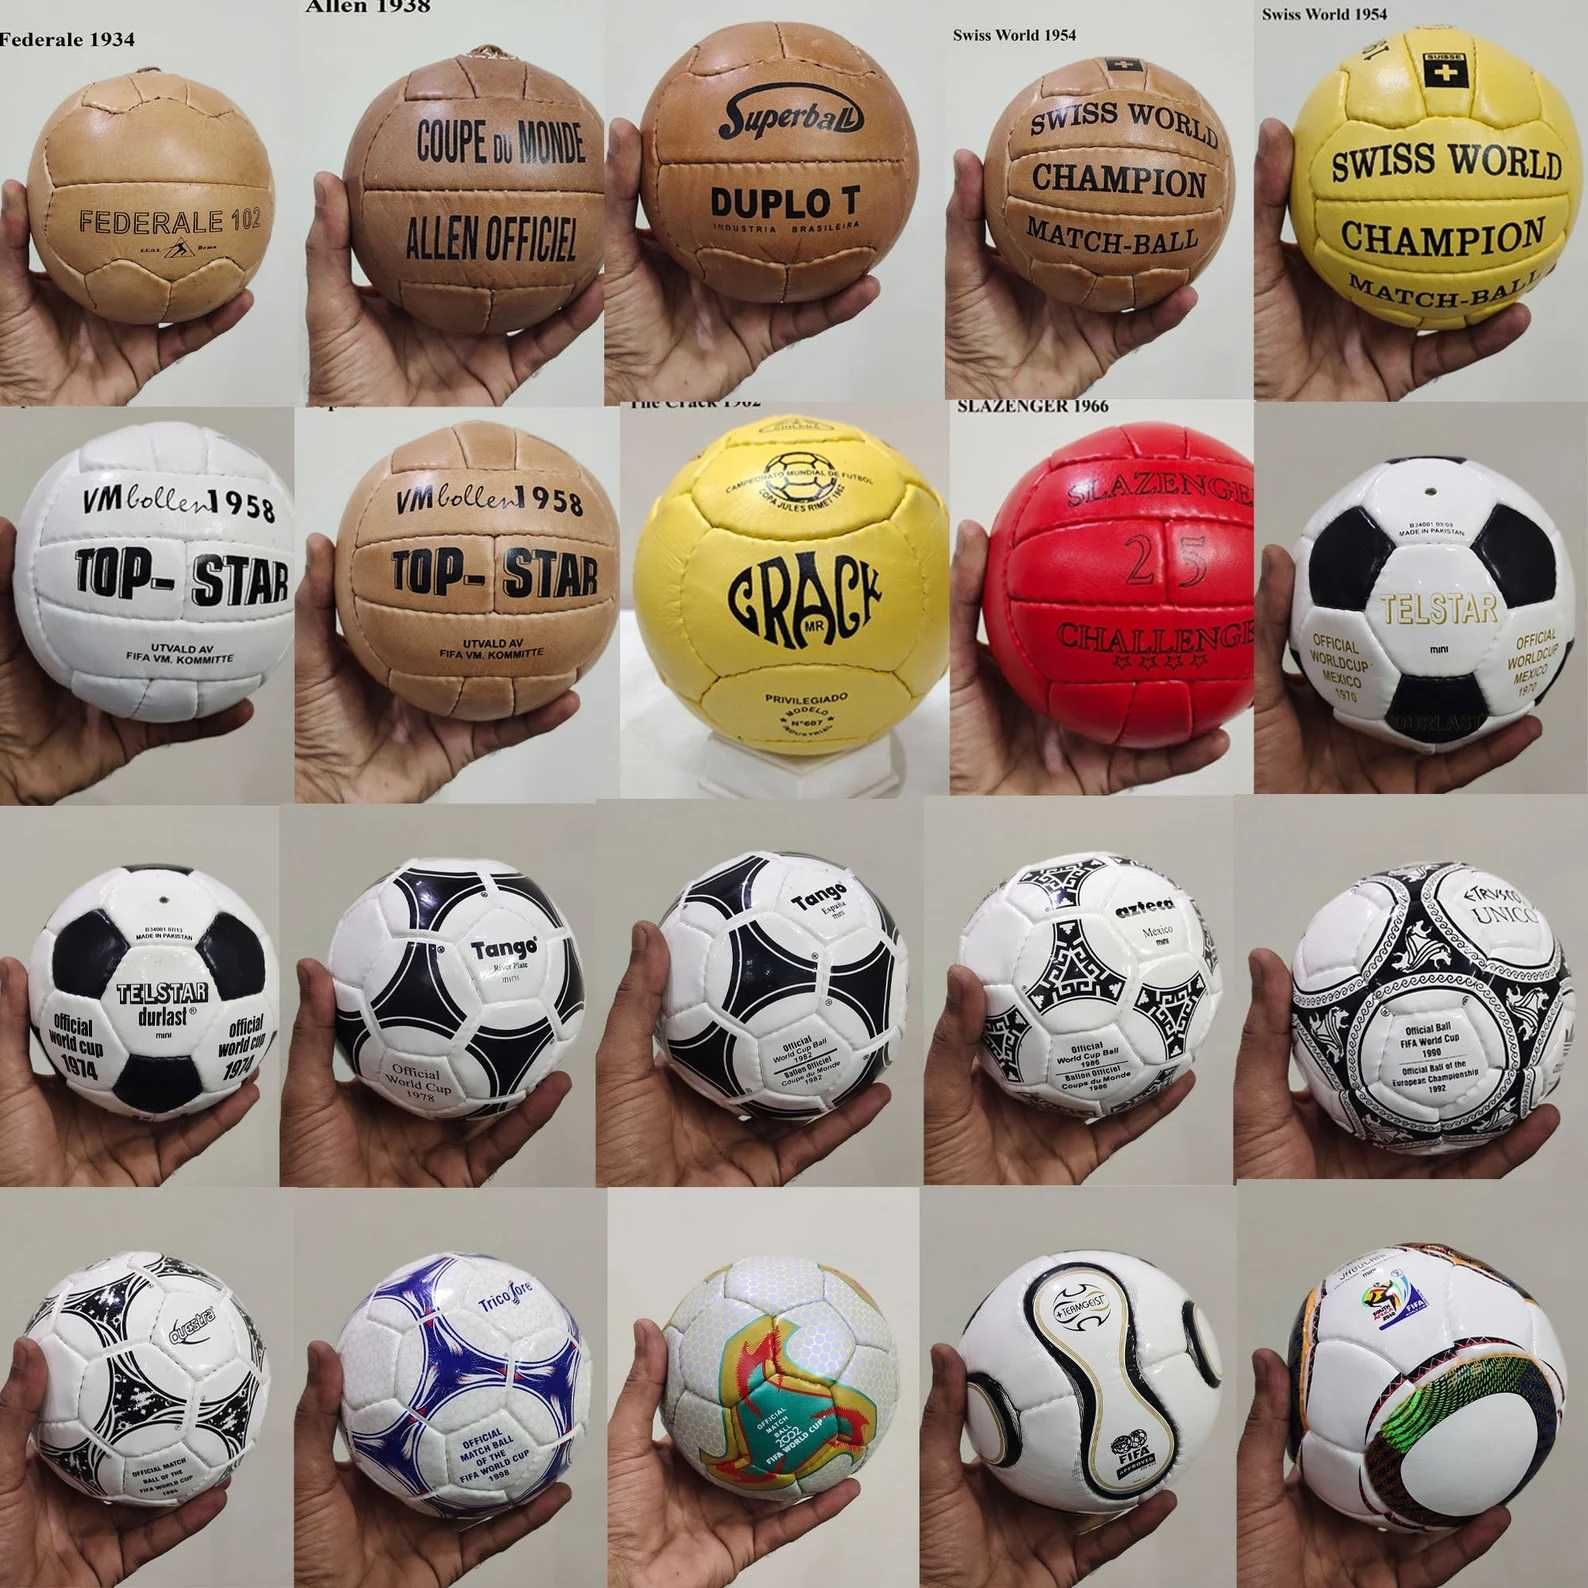 Adidas Brazuca 2014 FIFA World Cup Final Brazil Soccer Match Ball Size 5